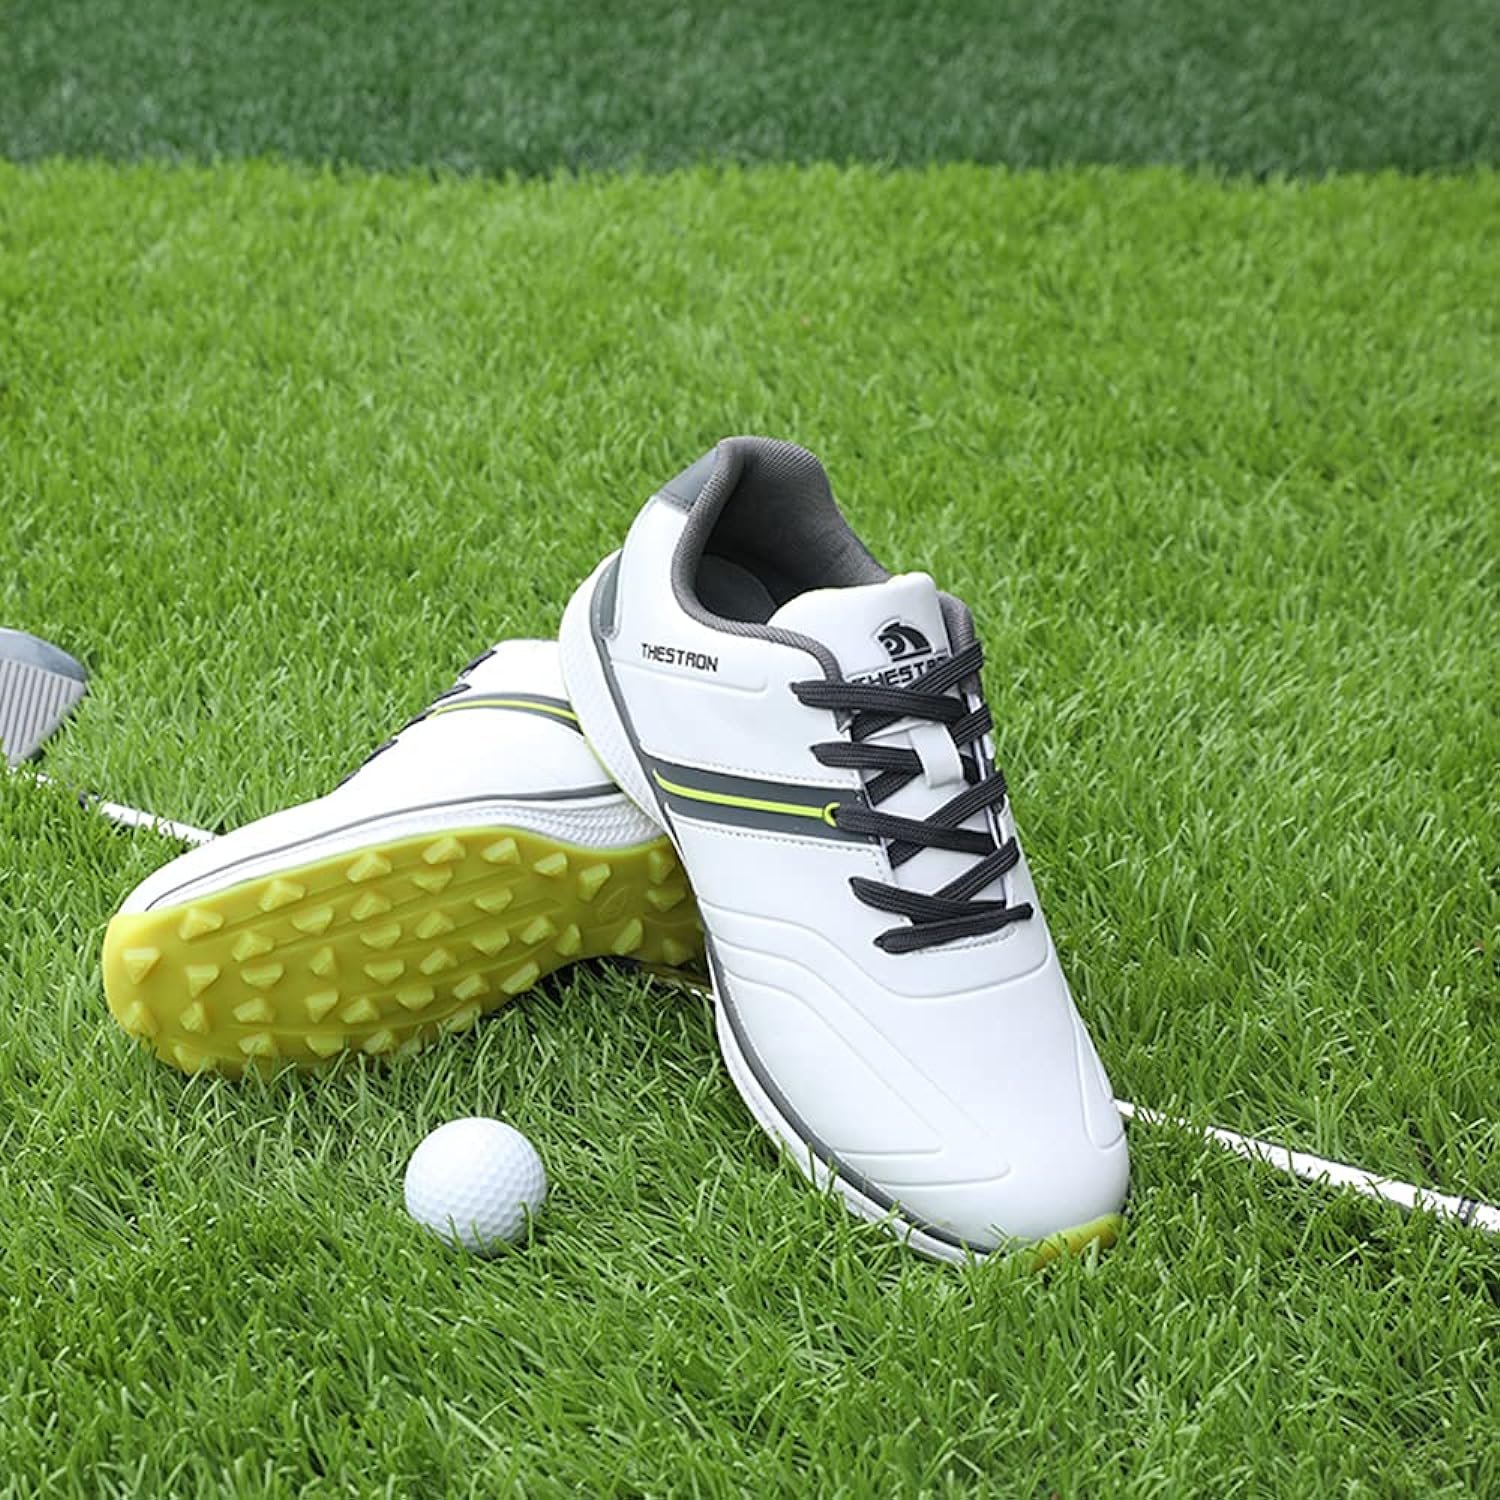 Waterproof Golf Shoes Men Professional Golf Sneakers Spikless Light Weight Walking Footwears Outdoor Male Walking Shoes